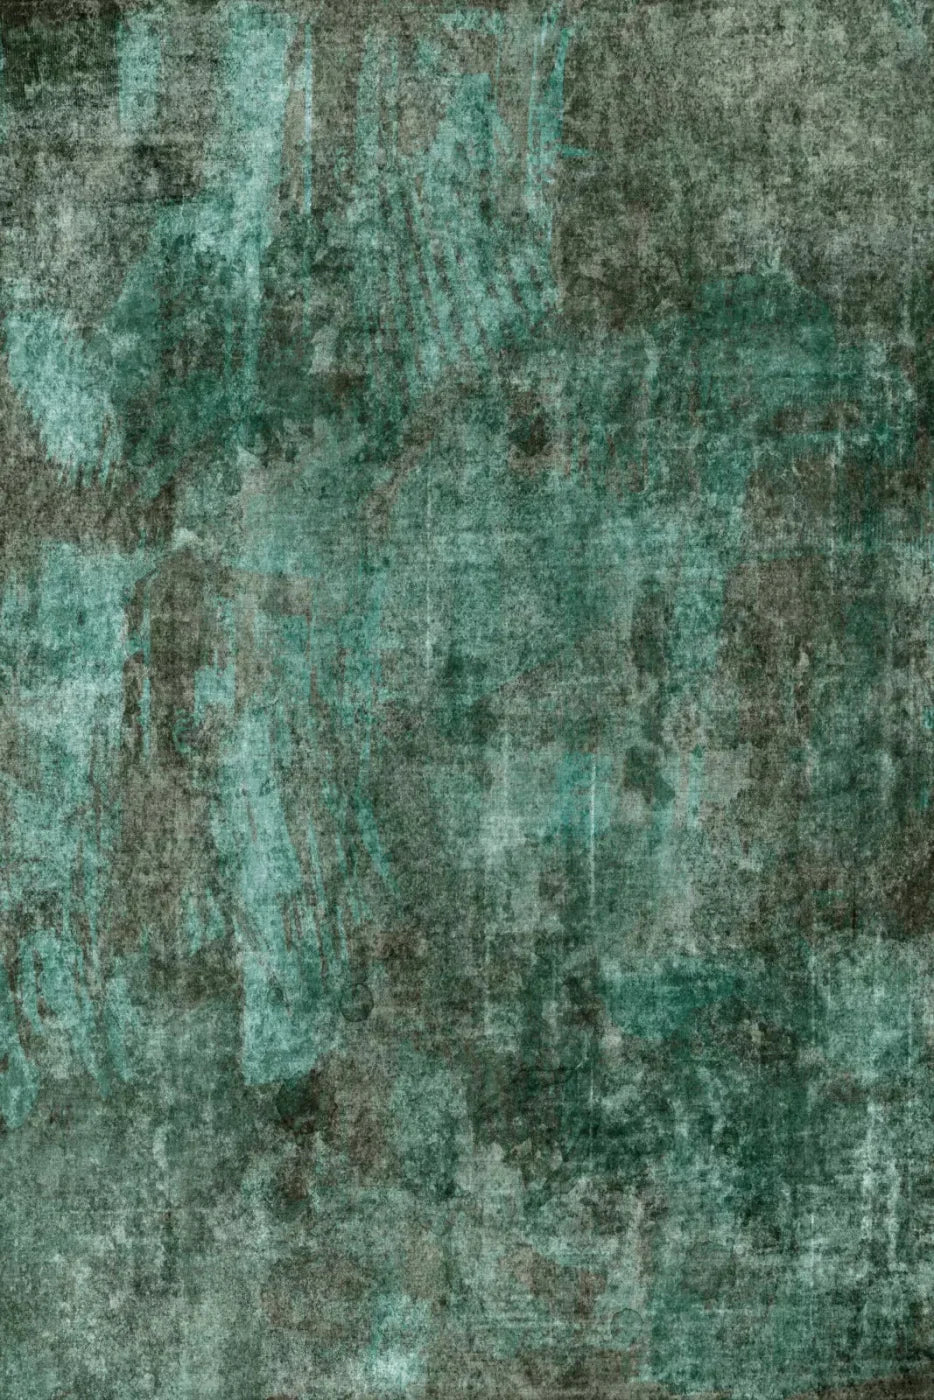 Metro Green 4X5 Rubbermat Floor ( 48 X 60 Inch ) Backdrop